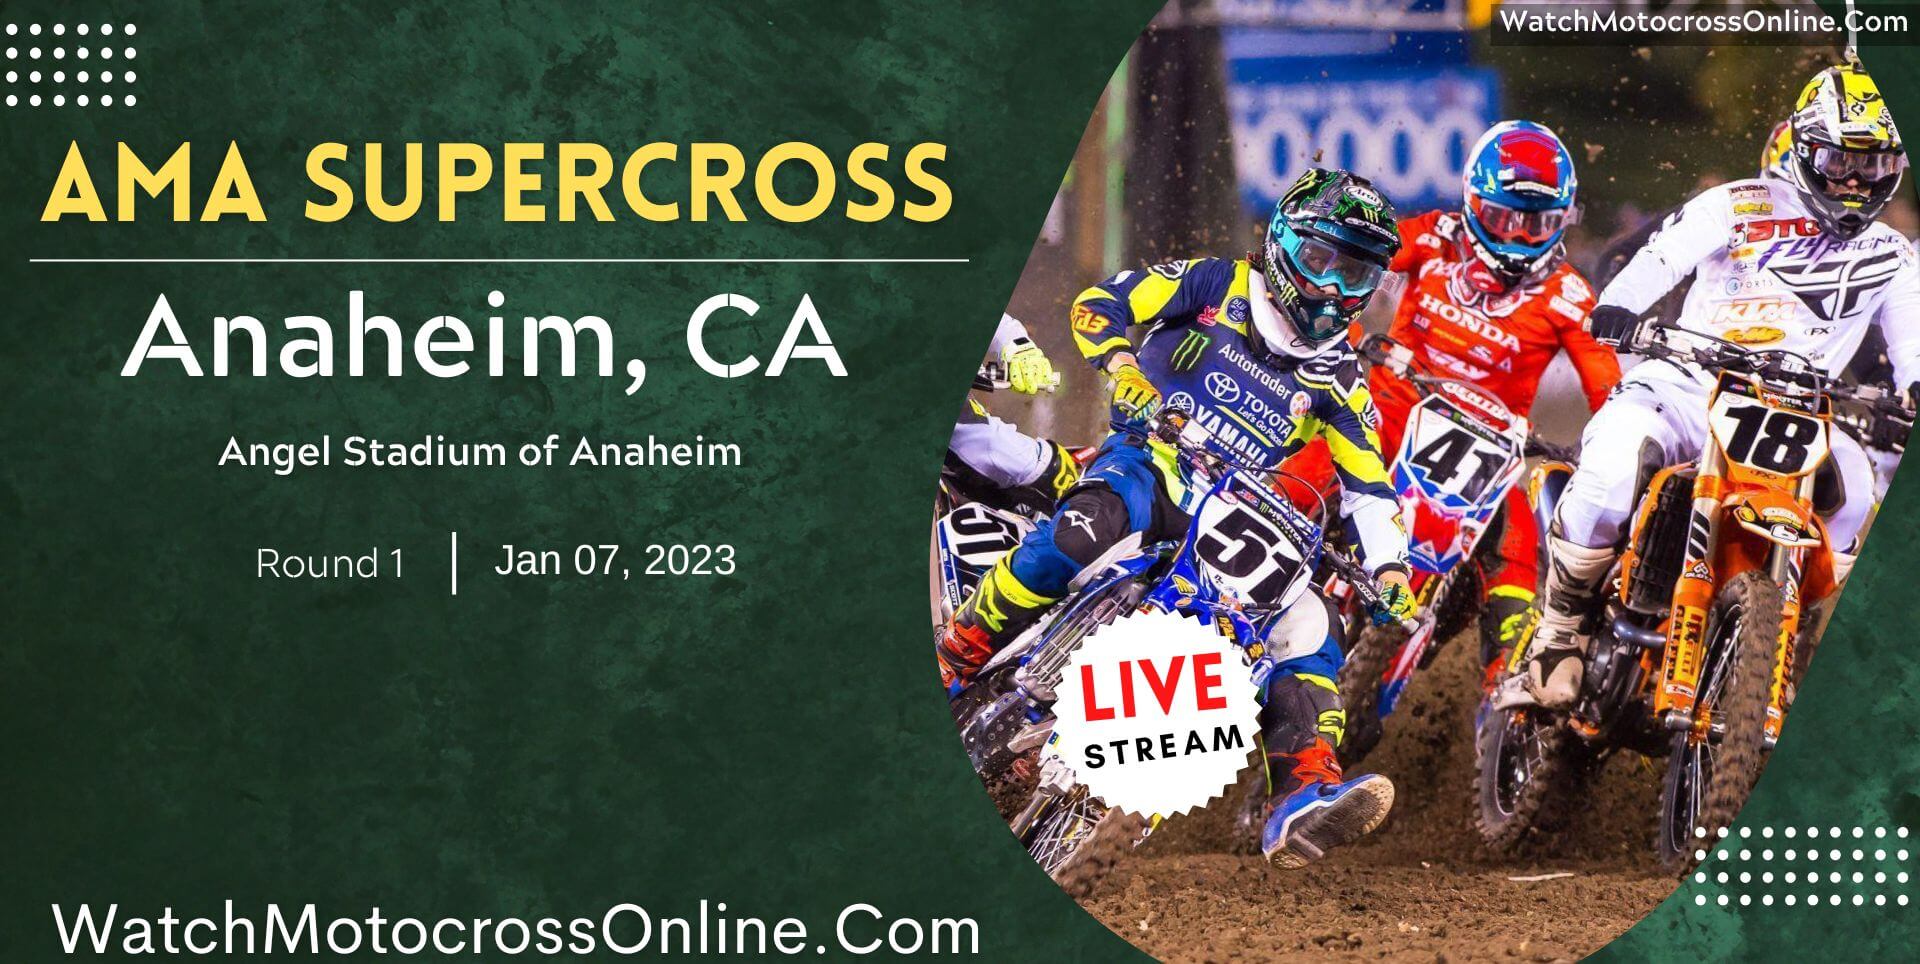 AMA Supercross Anaheim Live Stream